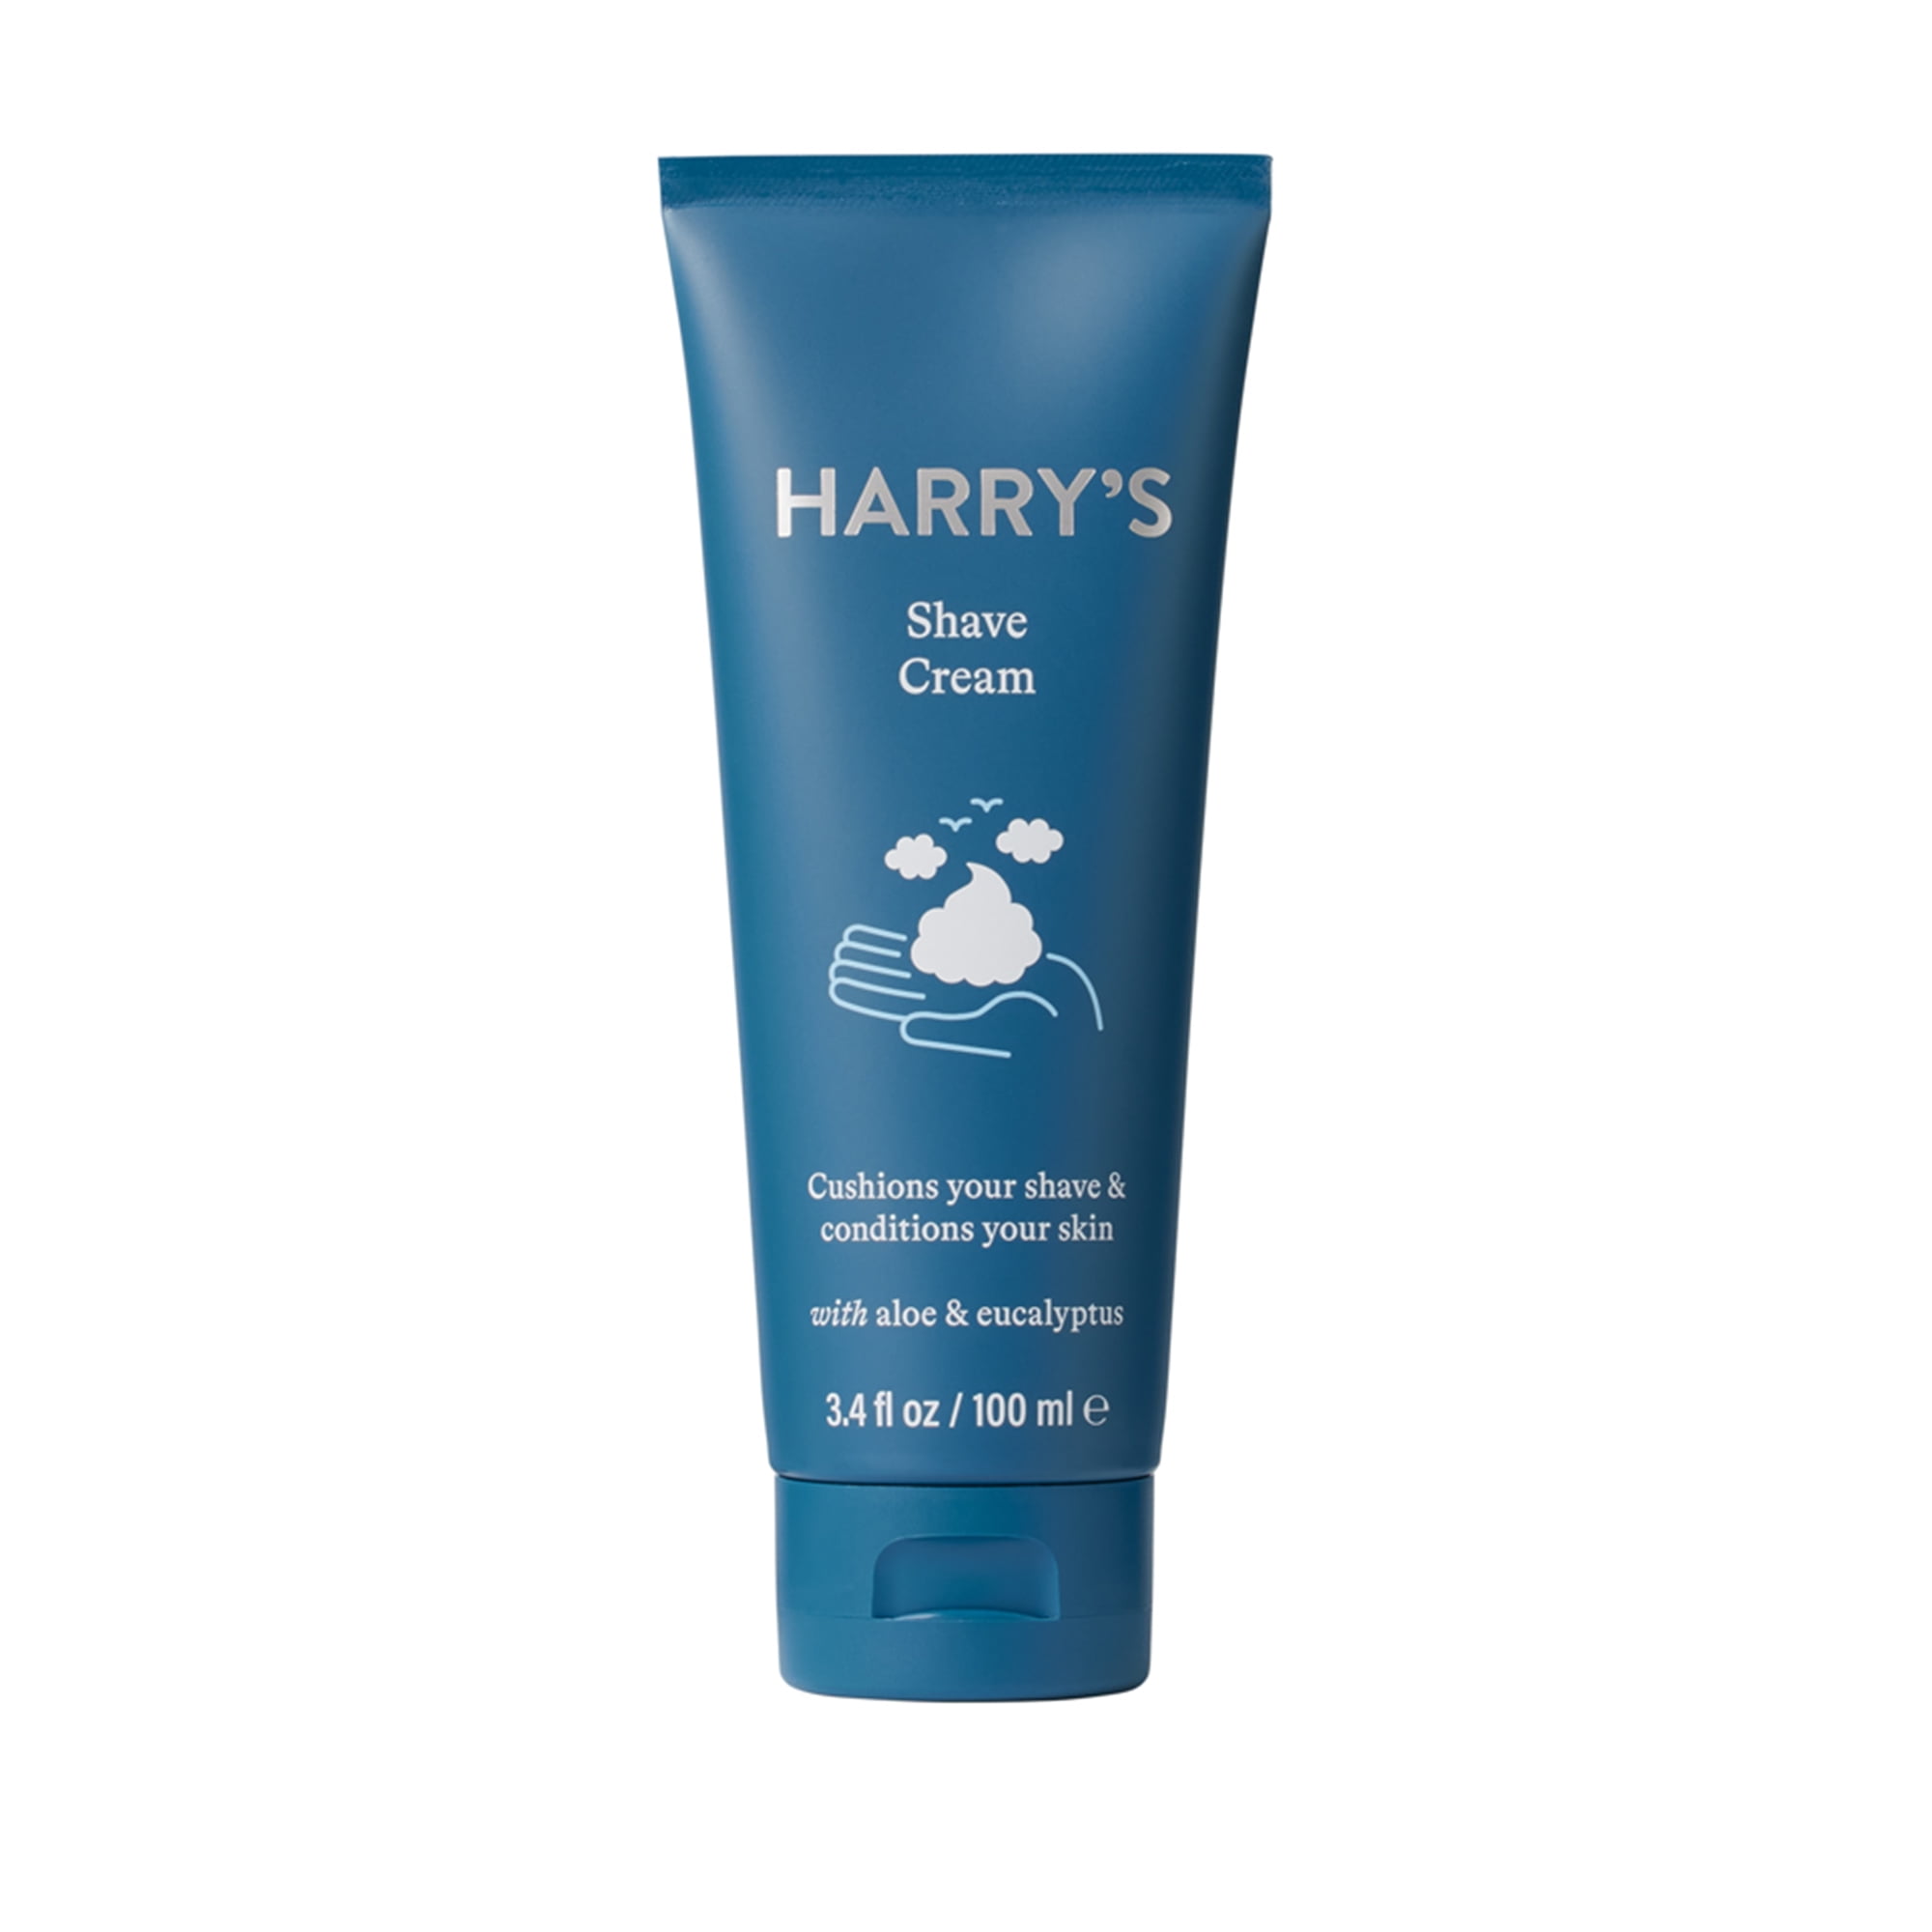 Harry's Men's Shave Cream with Aloe and Eucalyptus, 3.4 fl oz